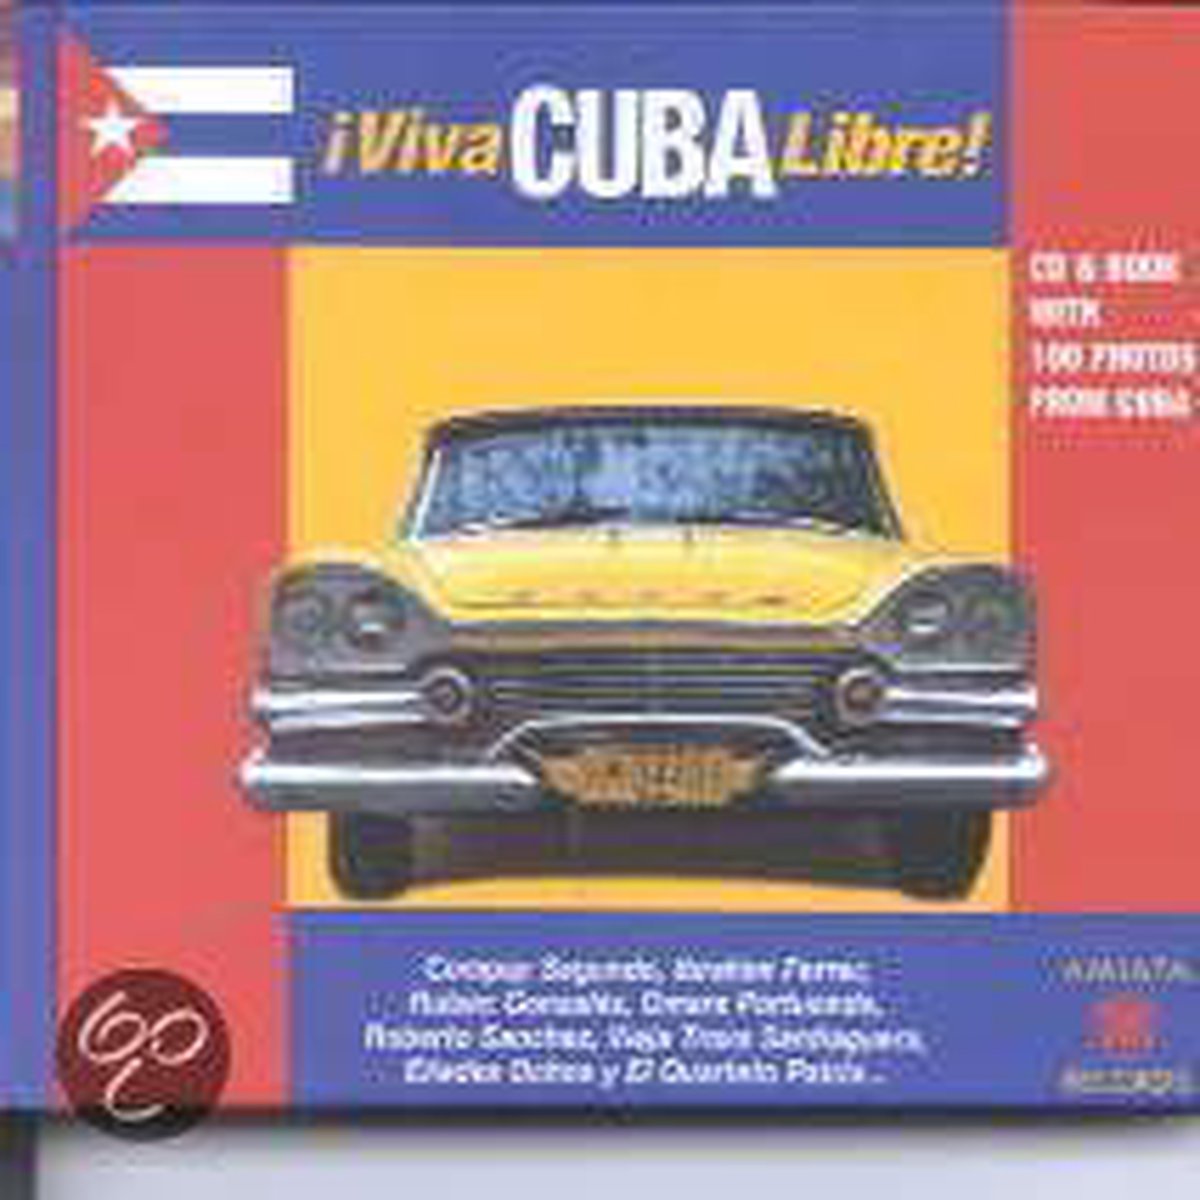 Afbeelding van product Viva Cuba Libre!  - various artists